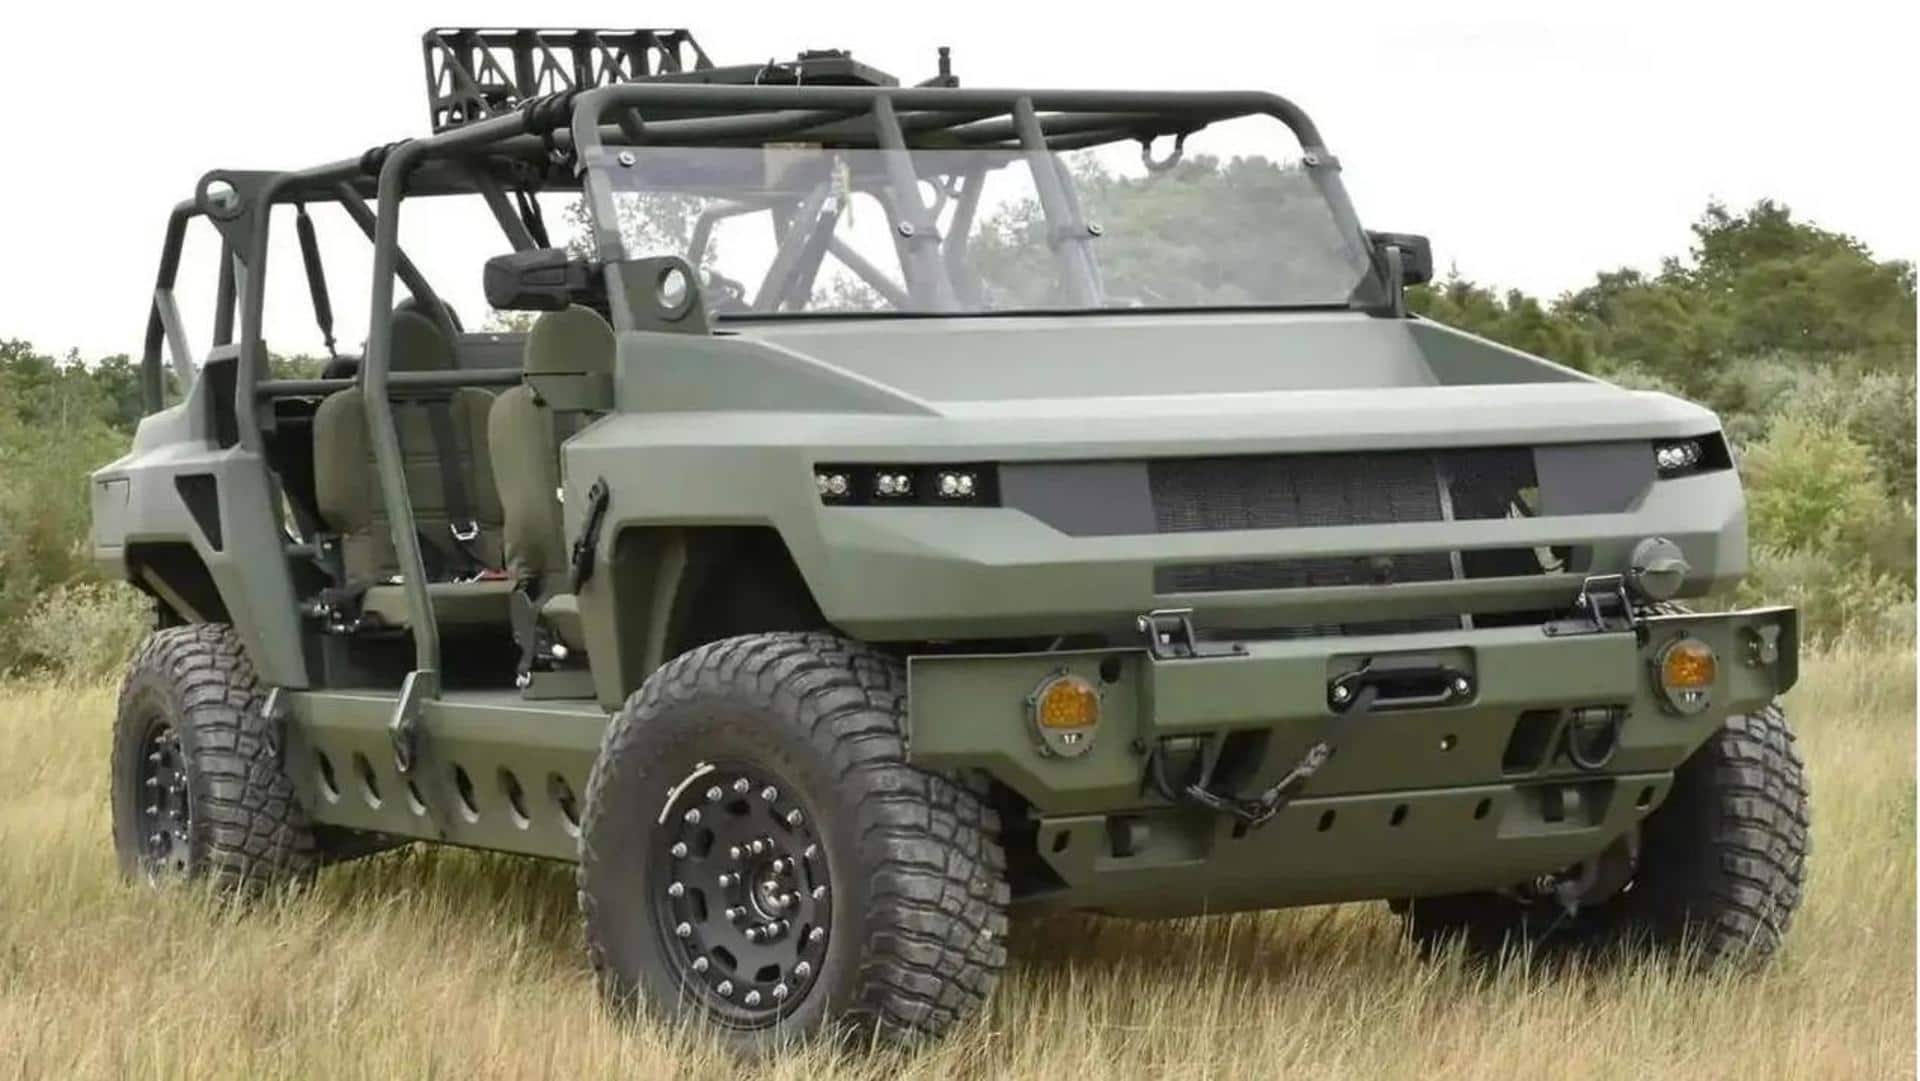 General Motors Defense showcases Hummer EV-based Electric Military Concept Vehicle